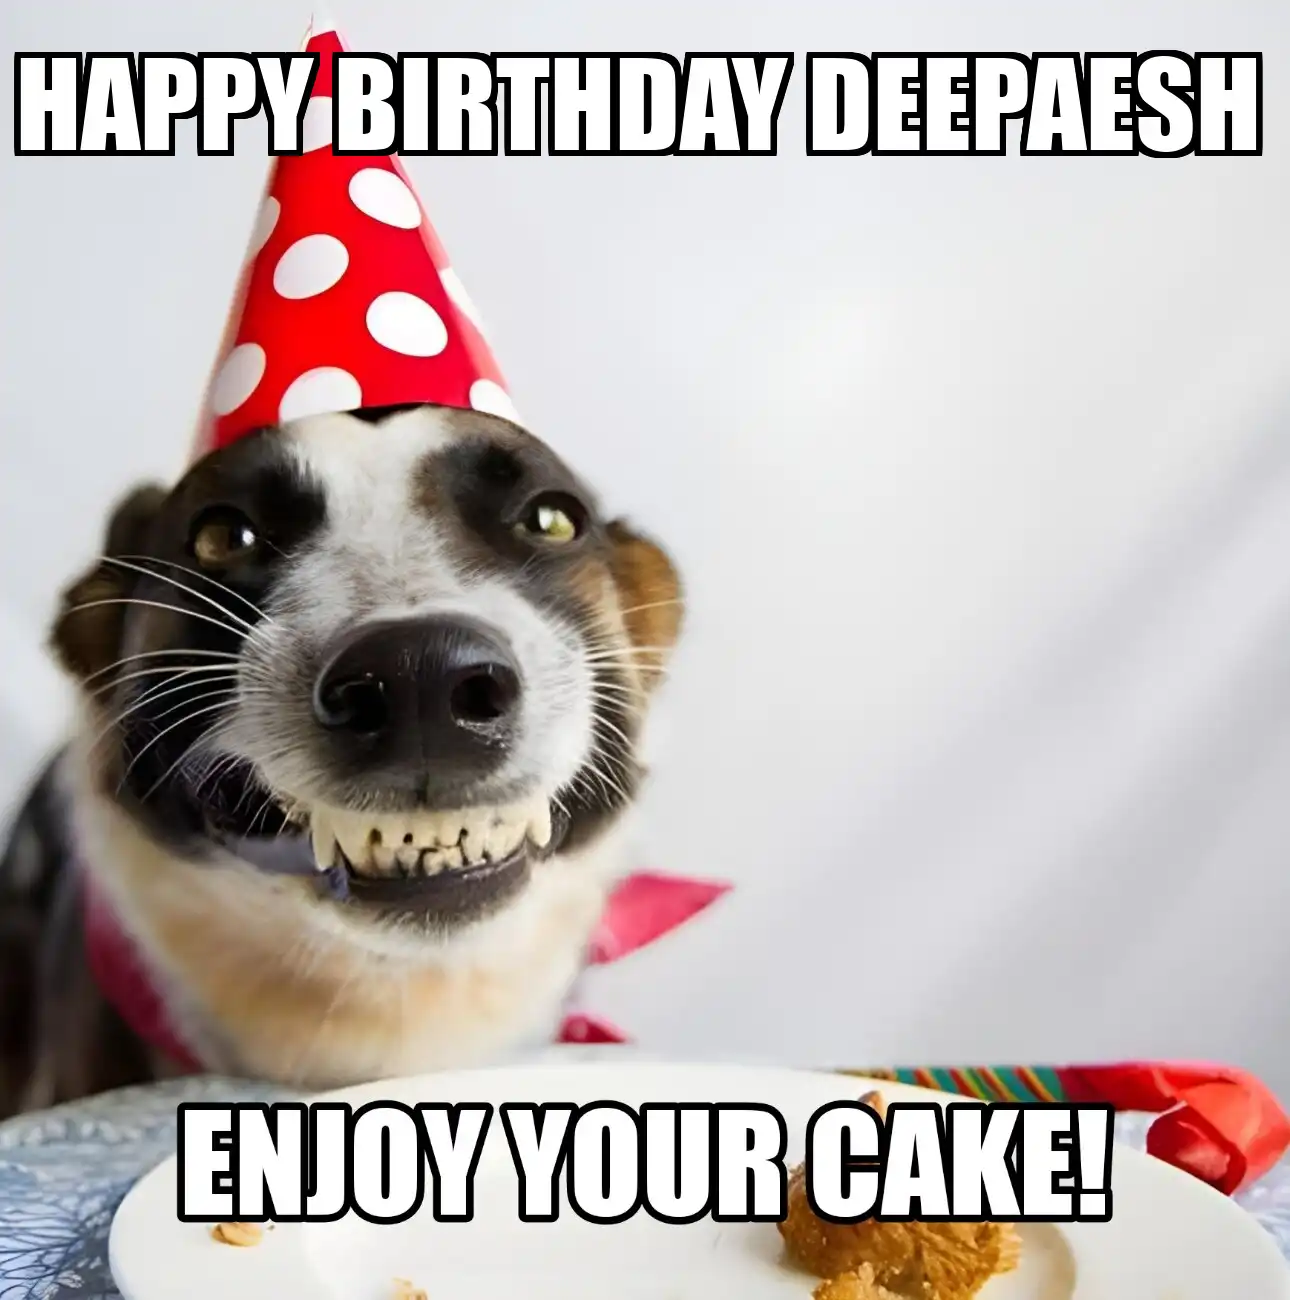 Happy Birthday Deepaesh Enjoy Your Cake Dog Meme